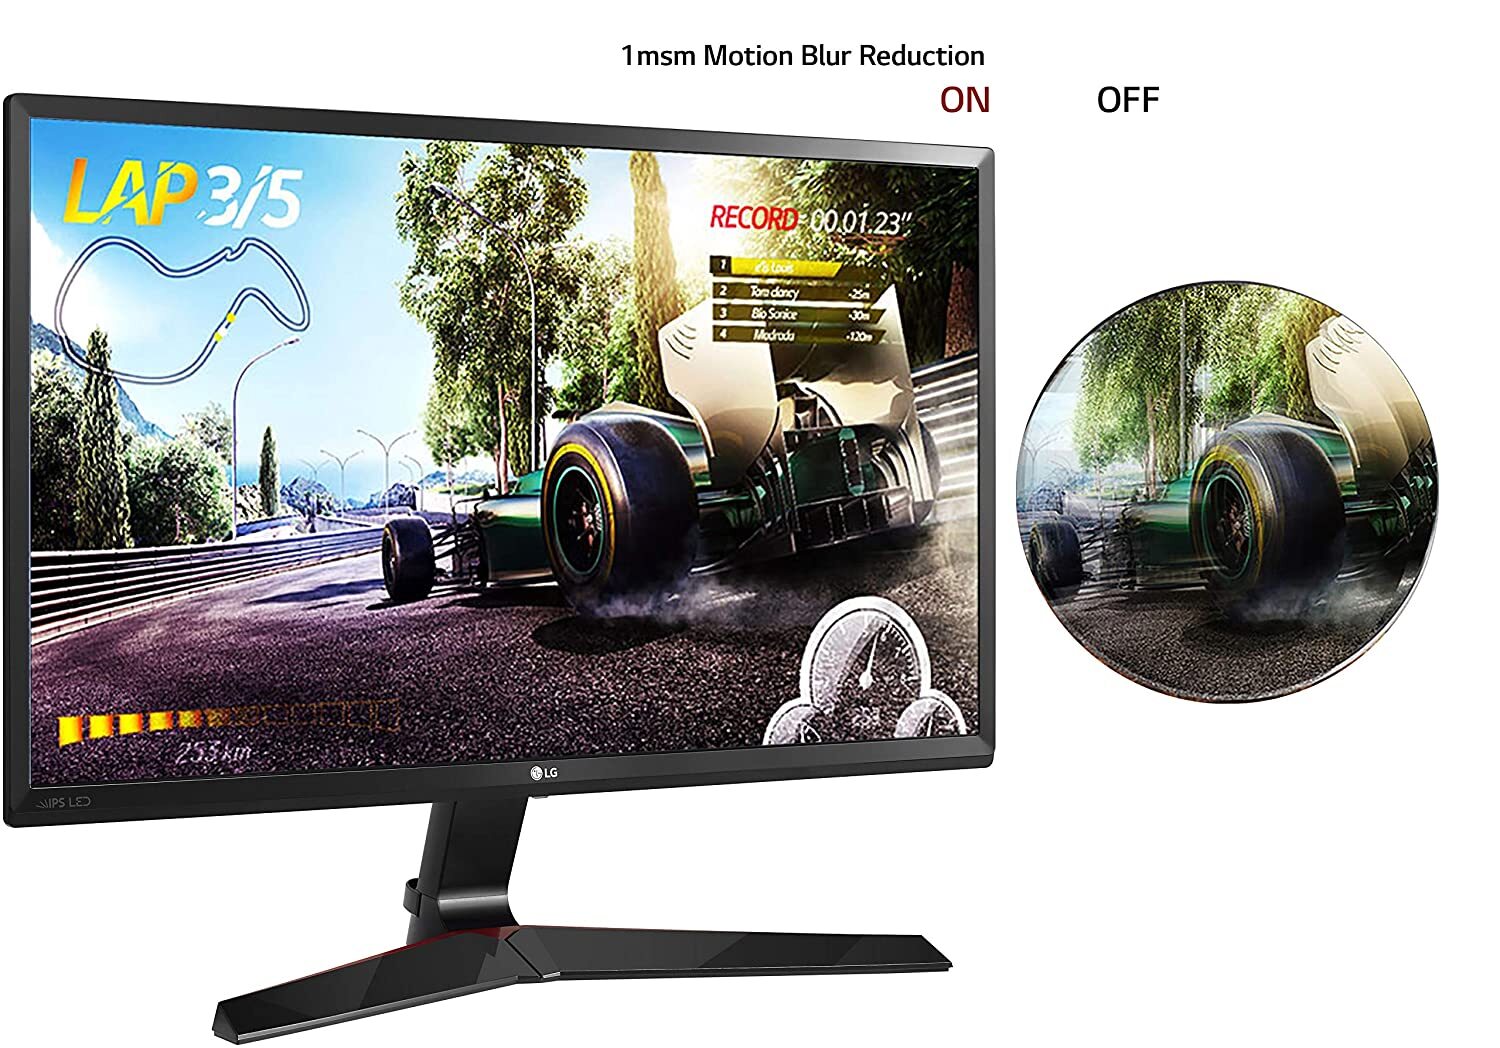 LG 60.96 cm (24 inch) Gaming Monitor - 1ms, 75Hz, AMD Freesync, Full HD, IPS Panel with VGA, HDMI, Display Port, 24MP59G (Black)